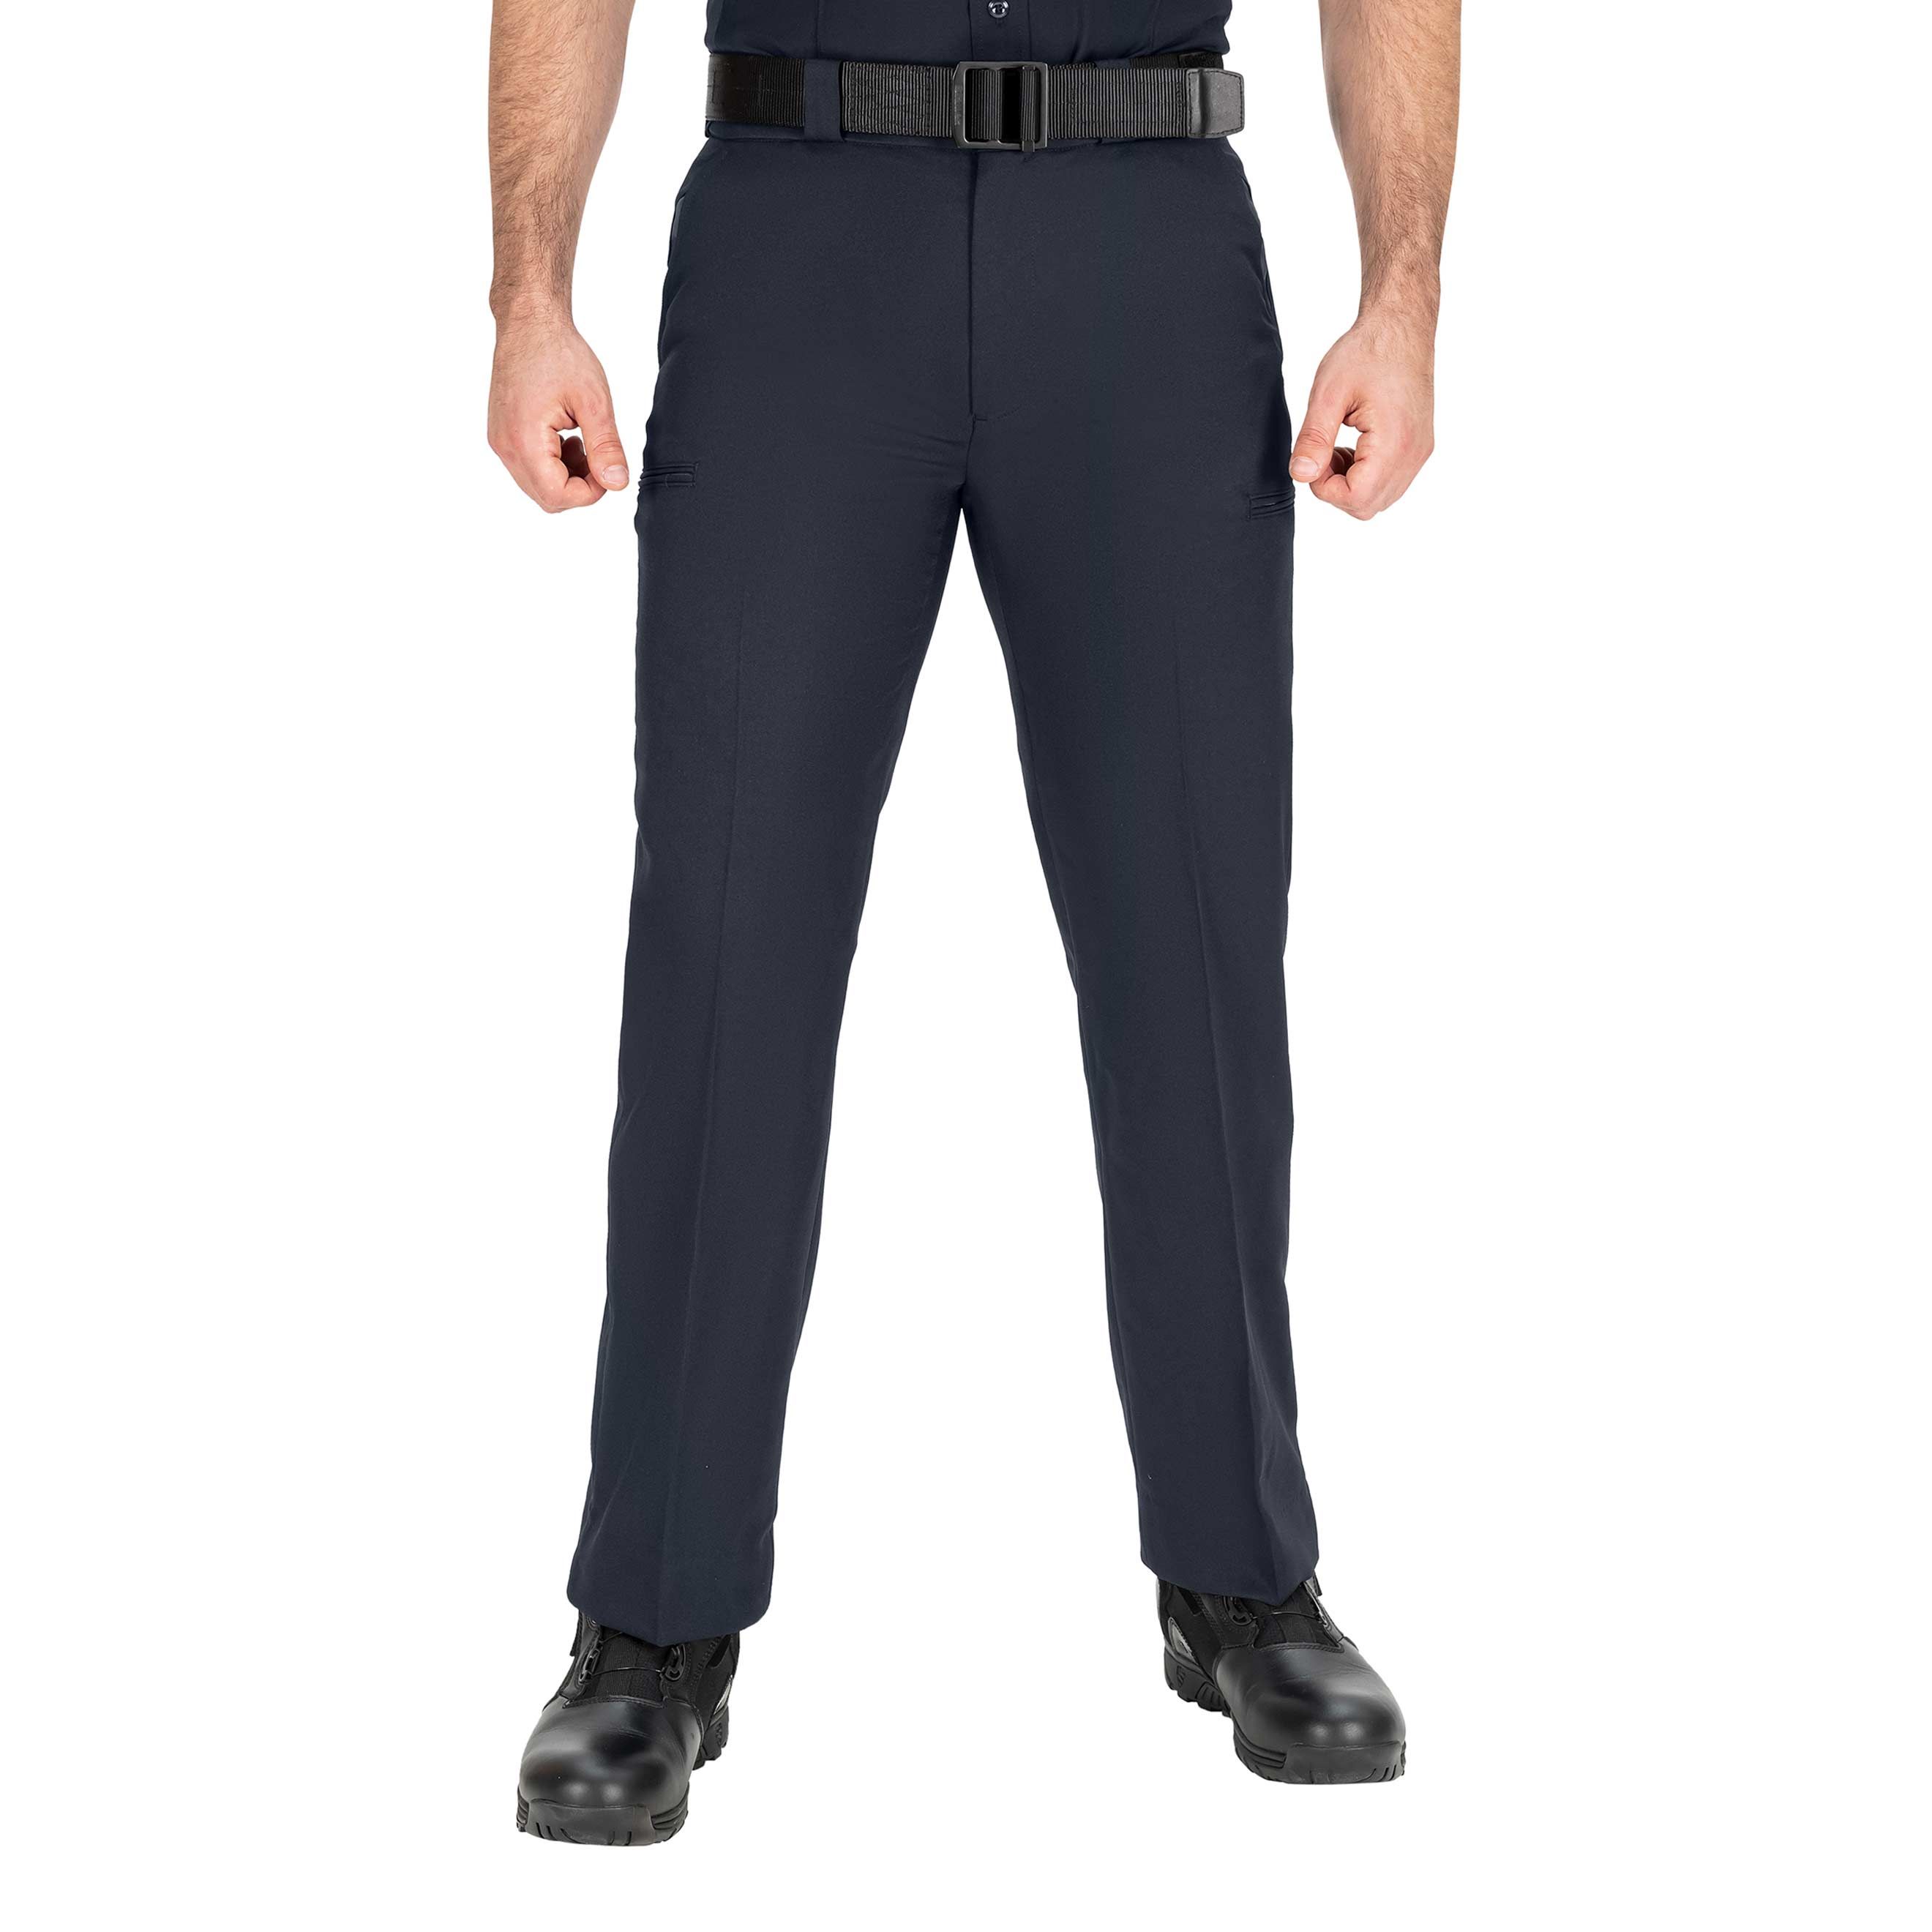 Blauer - 8657T - 6-Pocket Polyester Pants - Police Uniform Pants